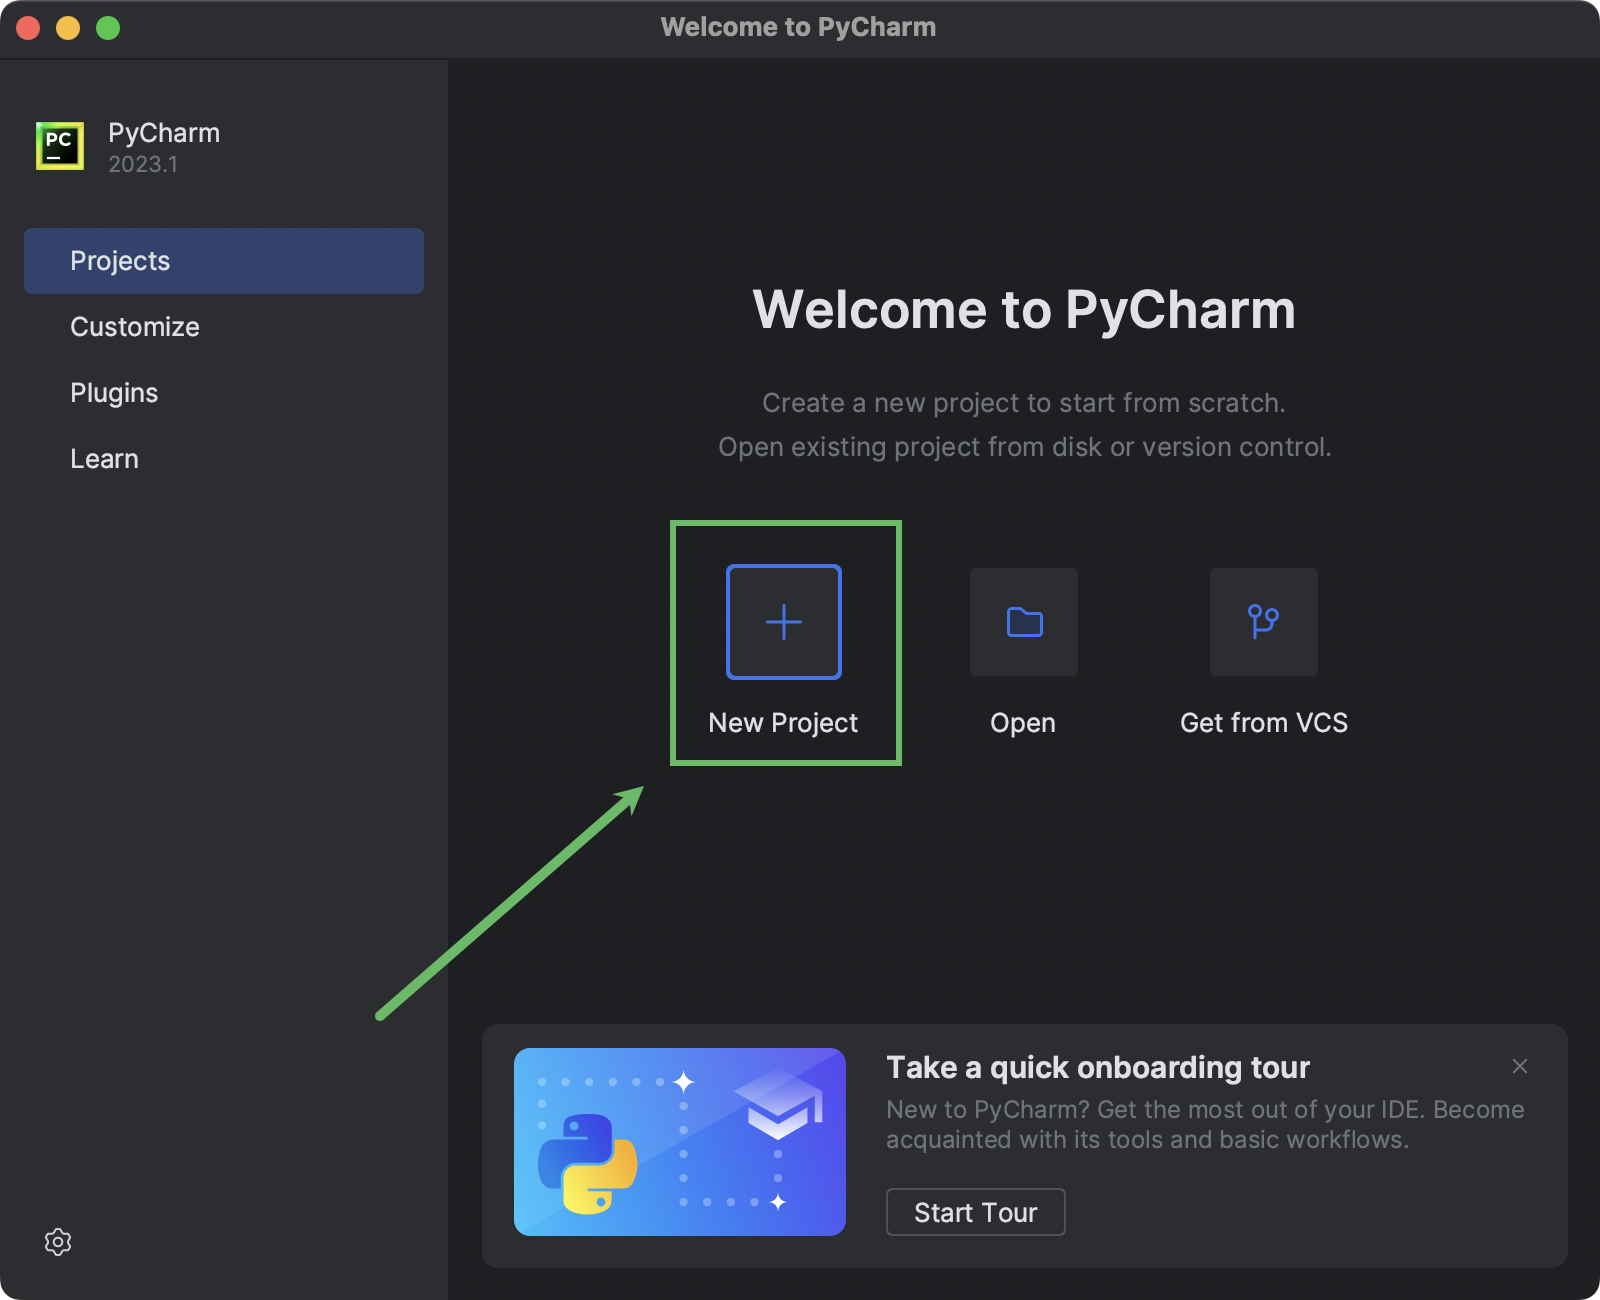 PyCharm’s Welcome screen